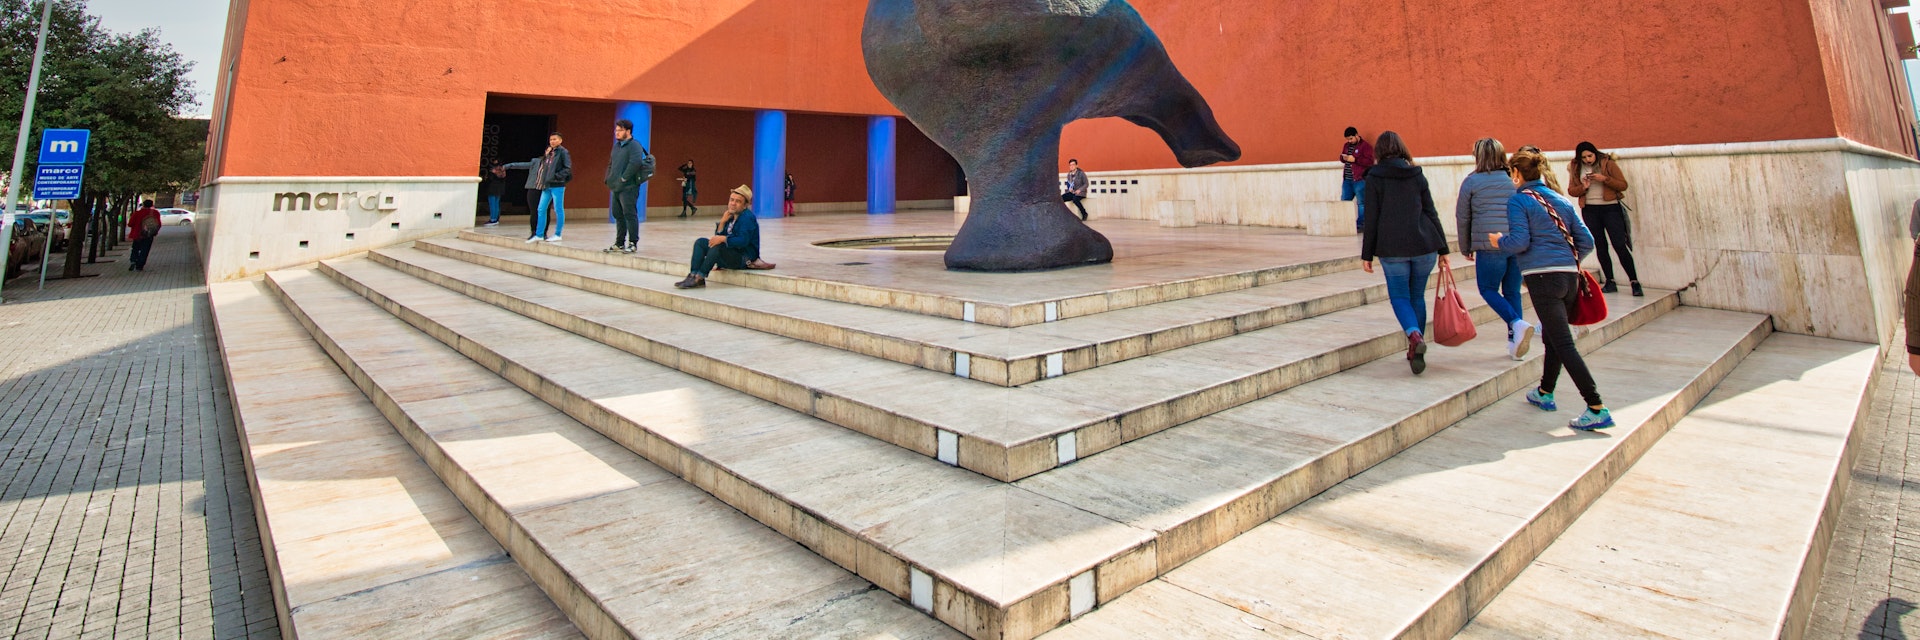 MARCO, Museum of Contemporary Art (Museo de Arte Contemporaneo) located on city landmark Macroplaza.